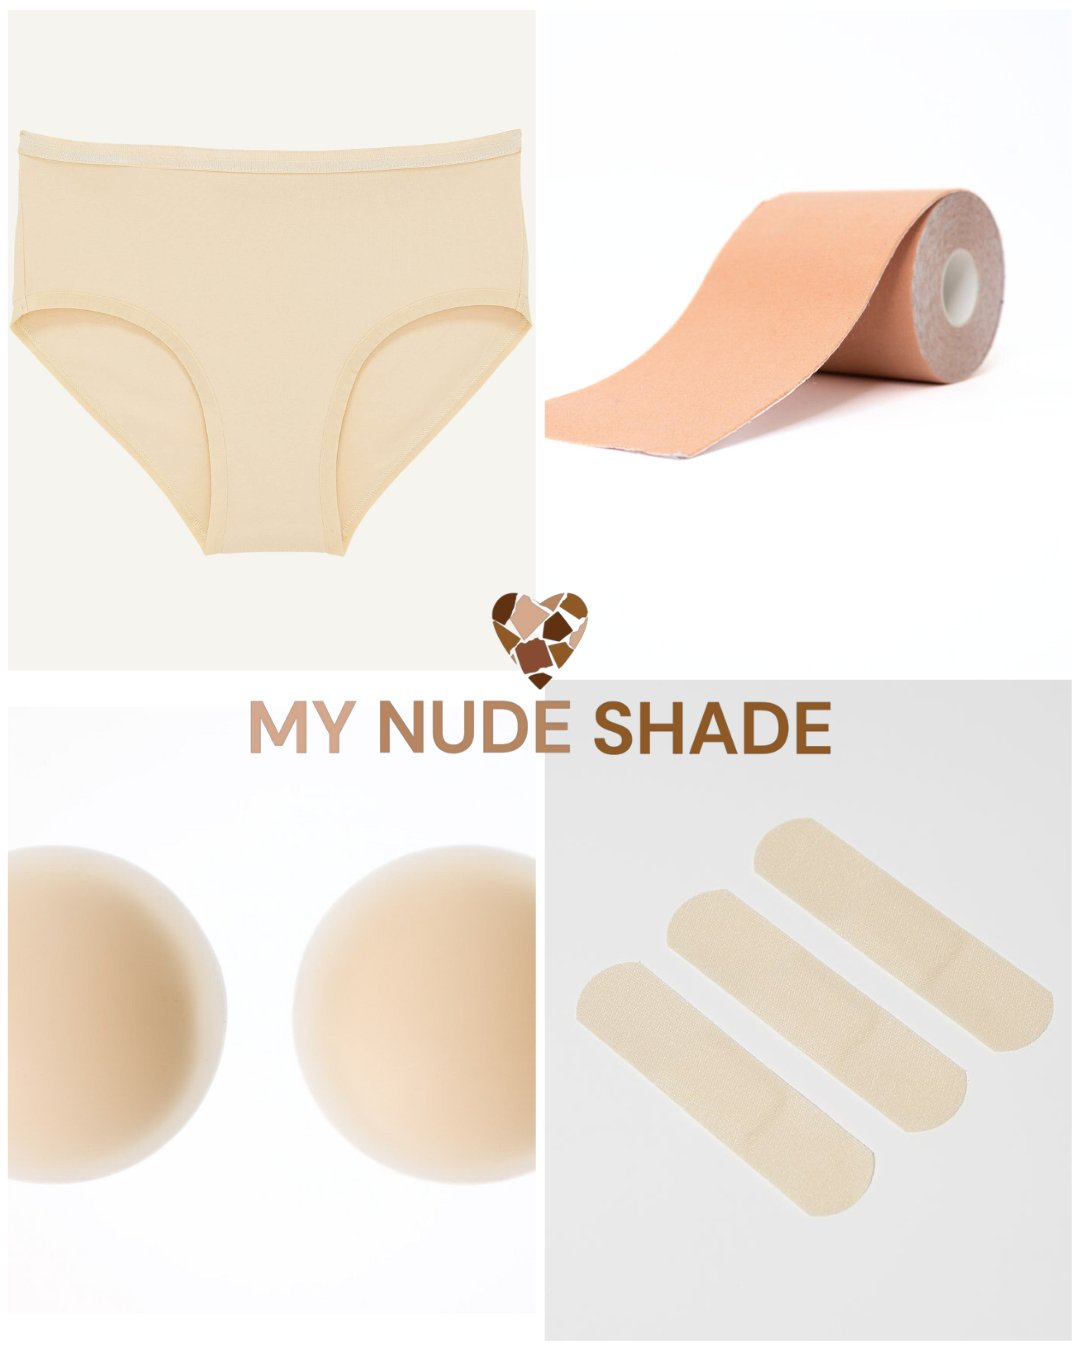 My Nude Shade Light to Tan Starter Bundle